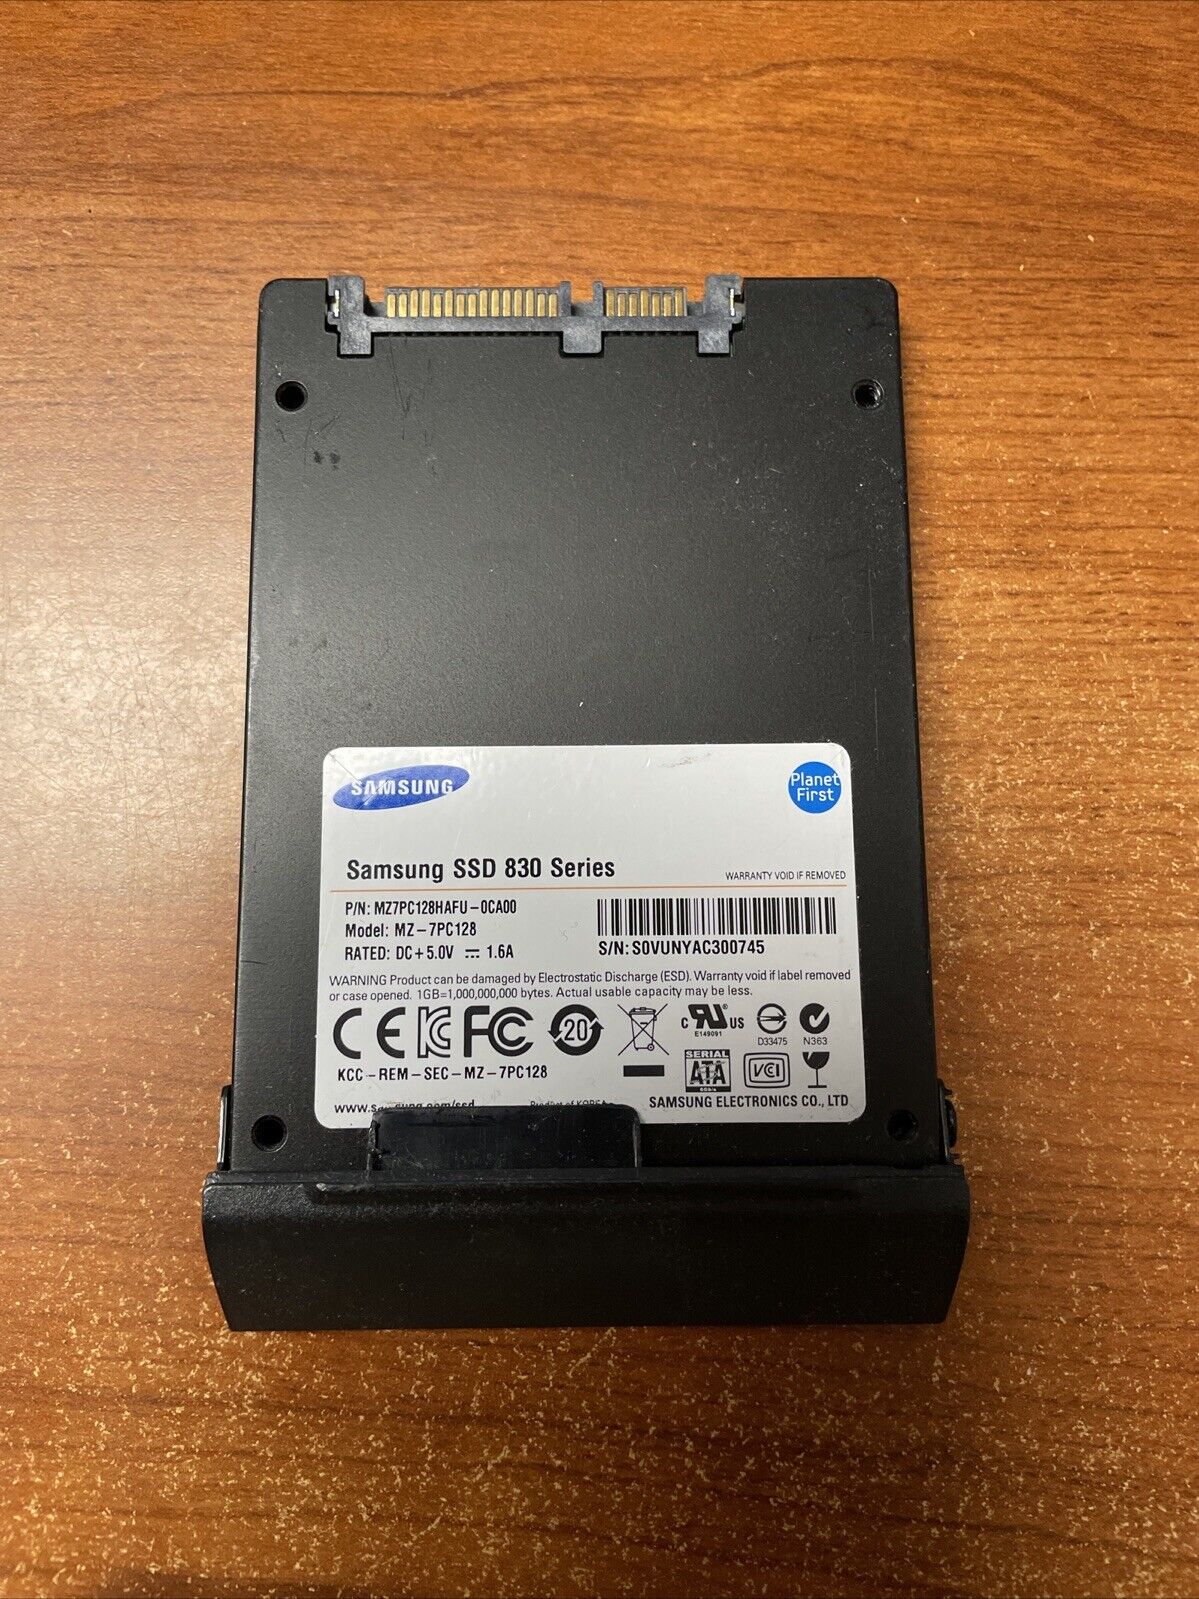 Samsung 830 MZ-7PC128 128 GB 2.5 in SATA III Solid State Drive